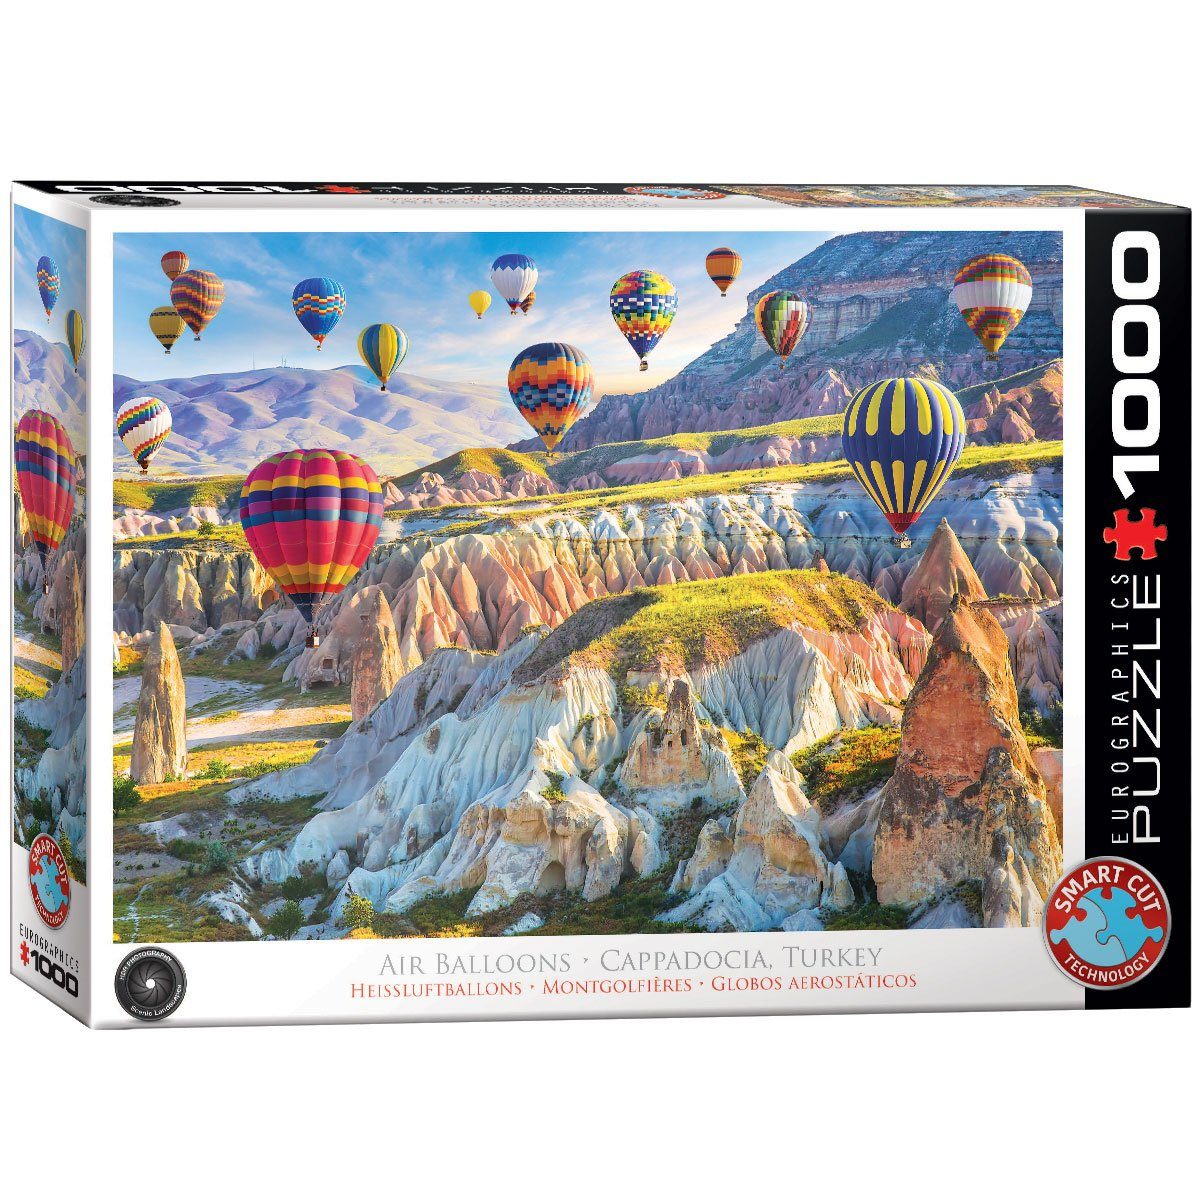 Puzzleteile, Türkei EUROGRAPHICS Europe Made in Cappadocia, Puzzle Puzzle, Heißluftballons 1000